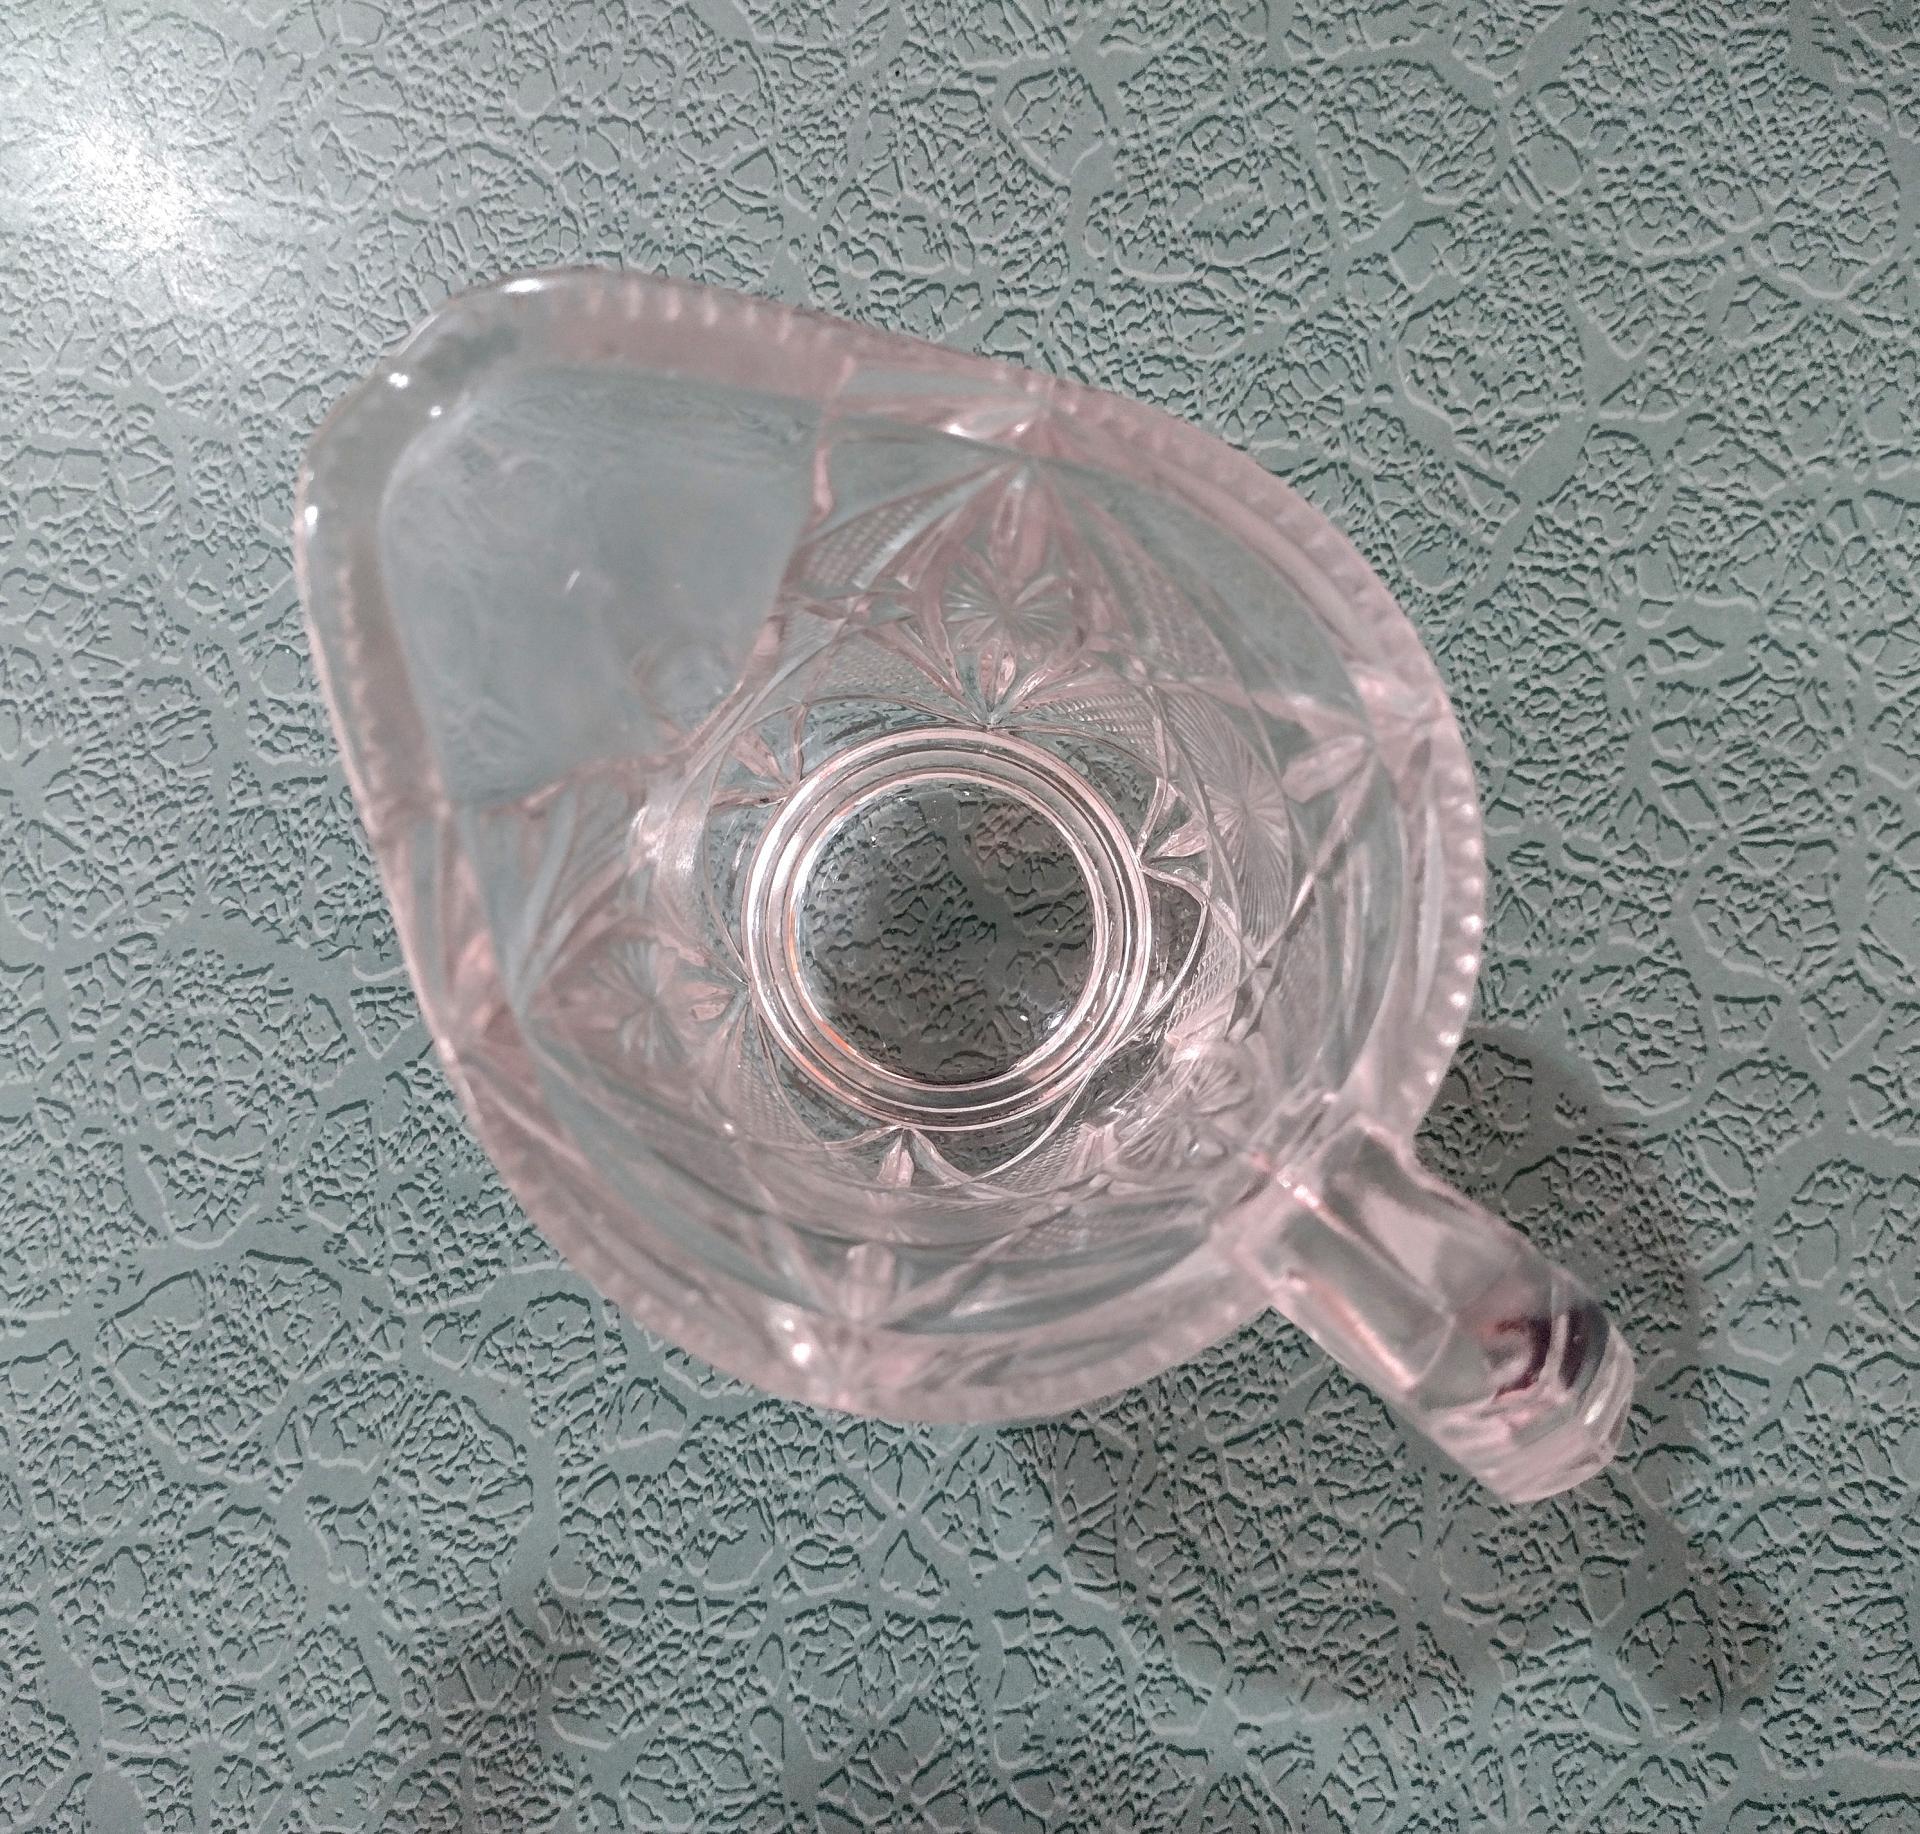 Antique Glass Creamer Pitcher, EAPG Clear Pressed Glass Creamer, Uranium Manganese Glass